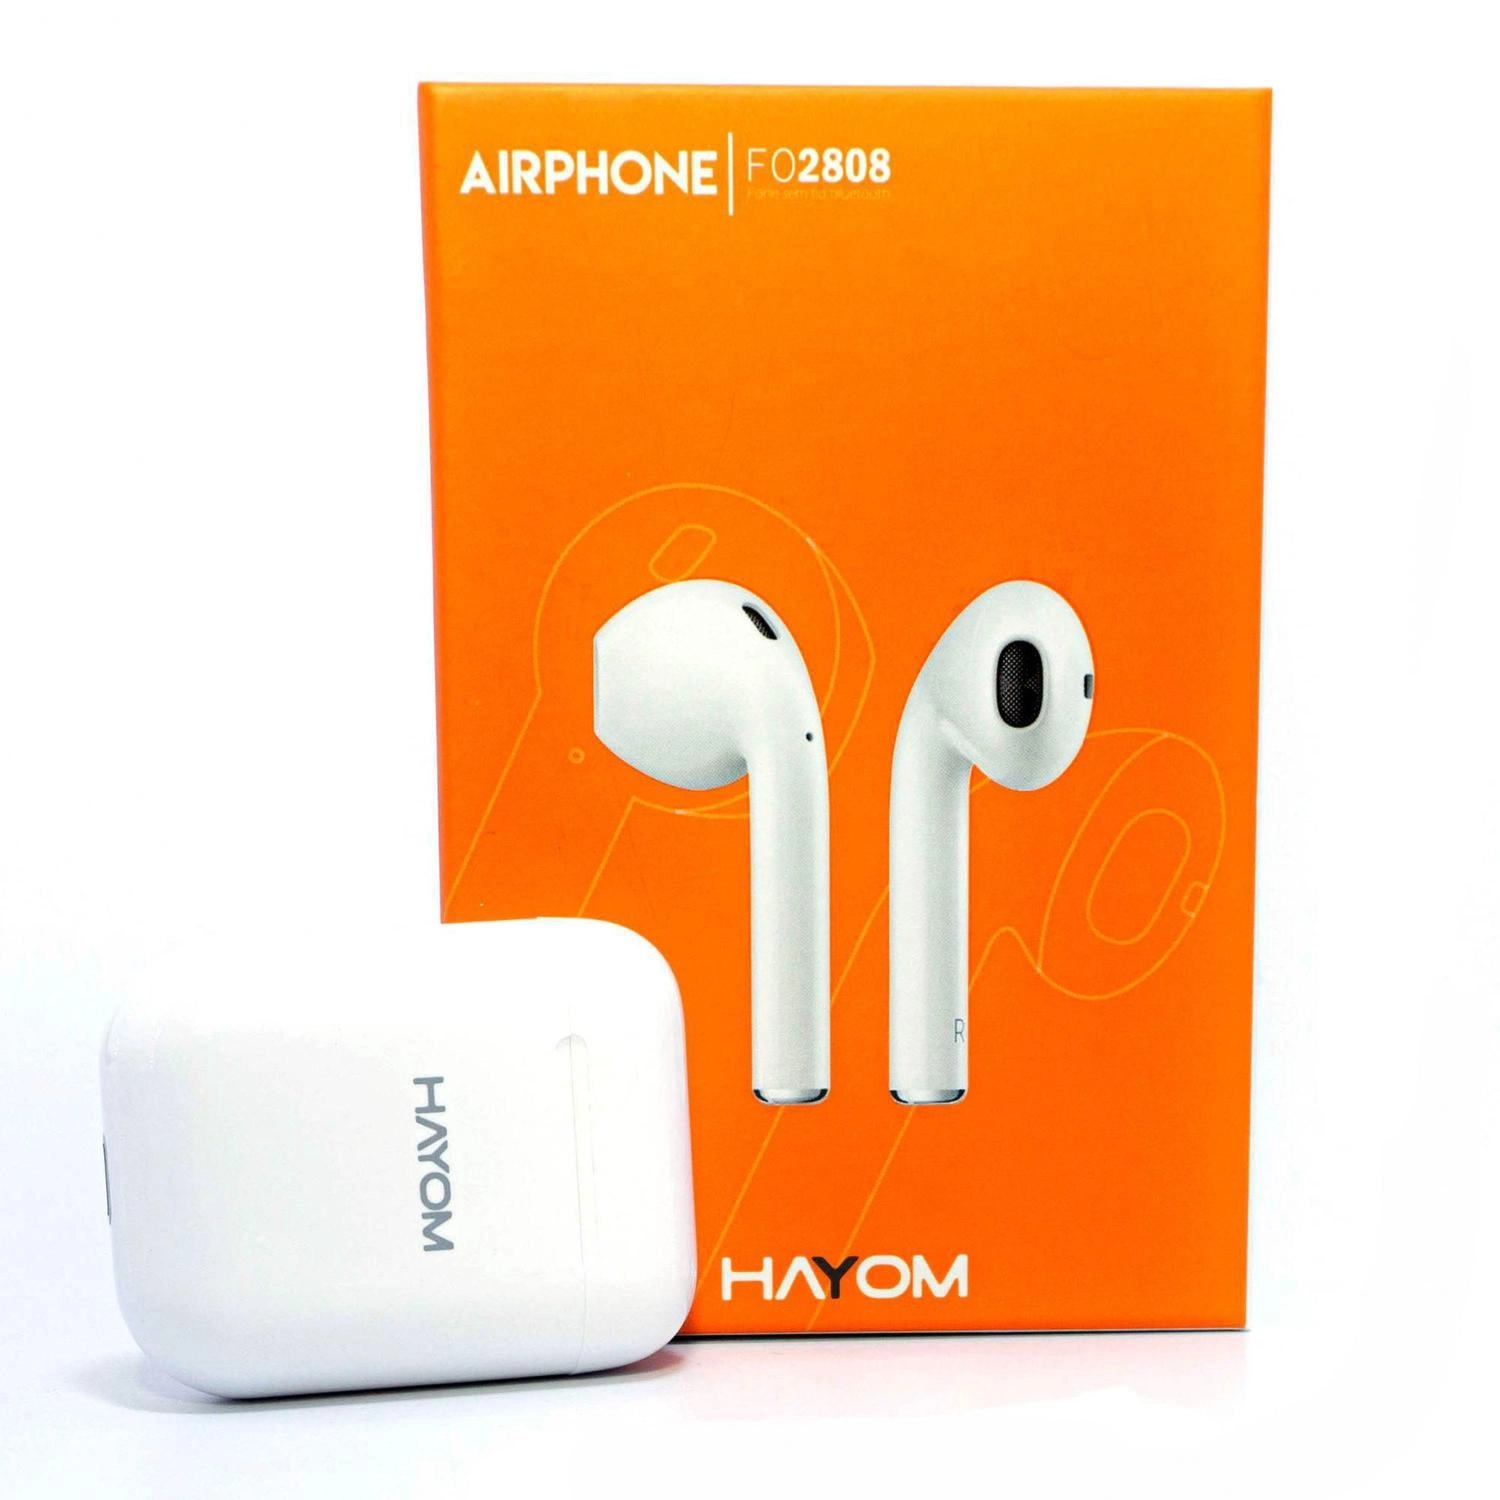 Airphone HAYOM Bluetooth - FO2808